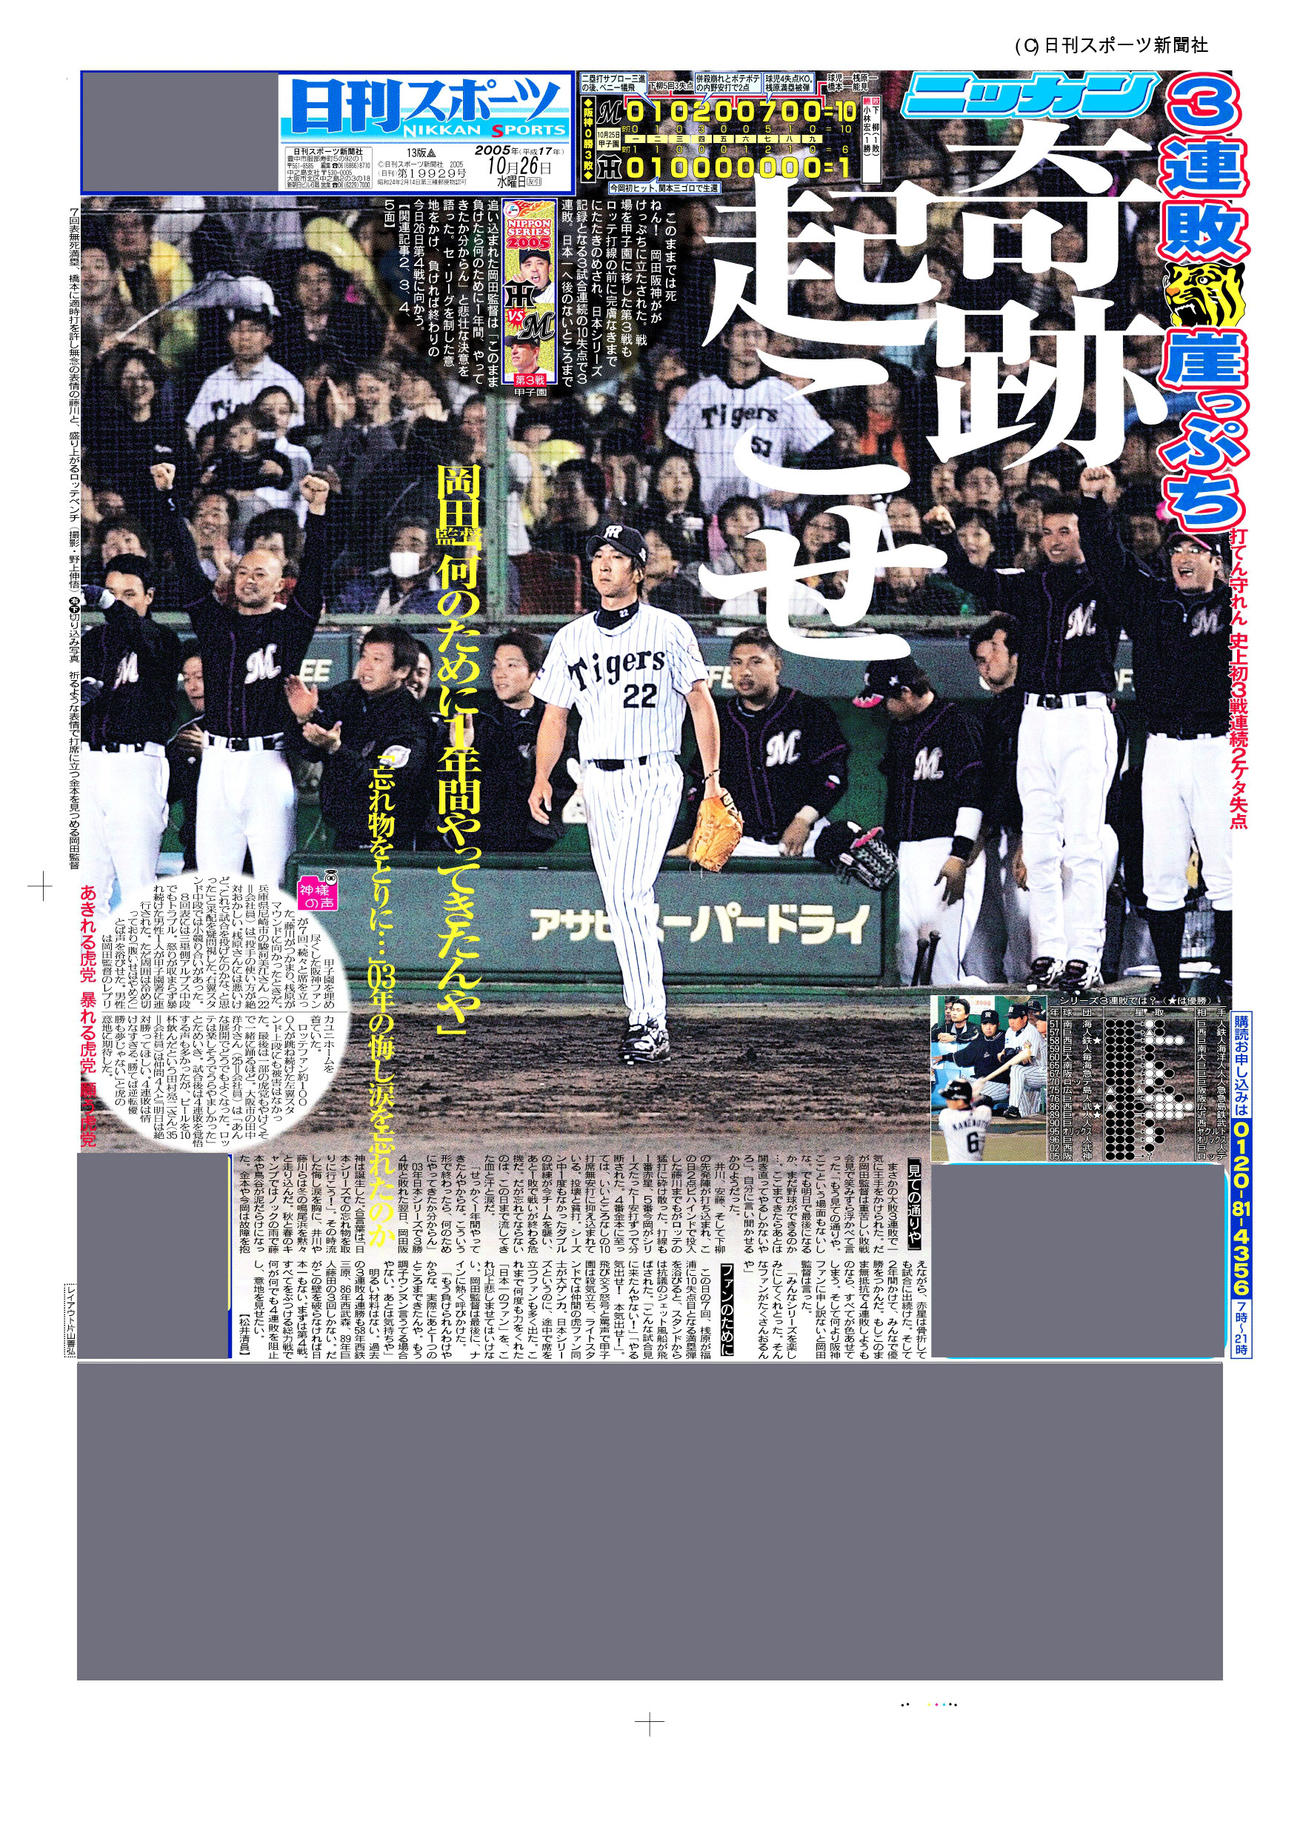 2005年10月26日付日刊スポーツ大阪版紙面